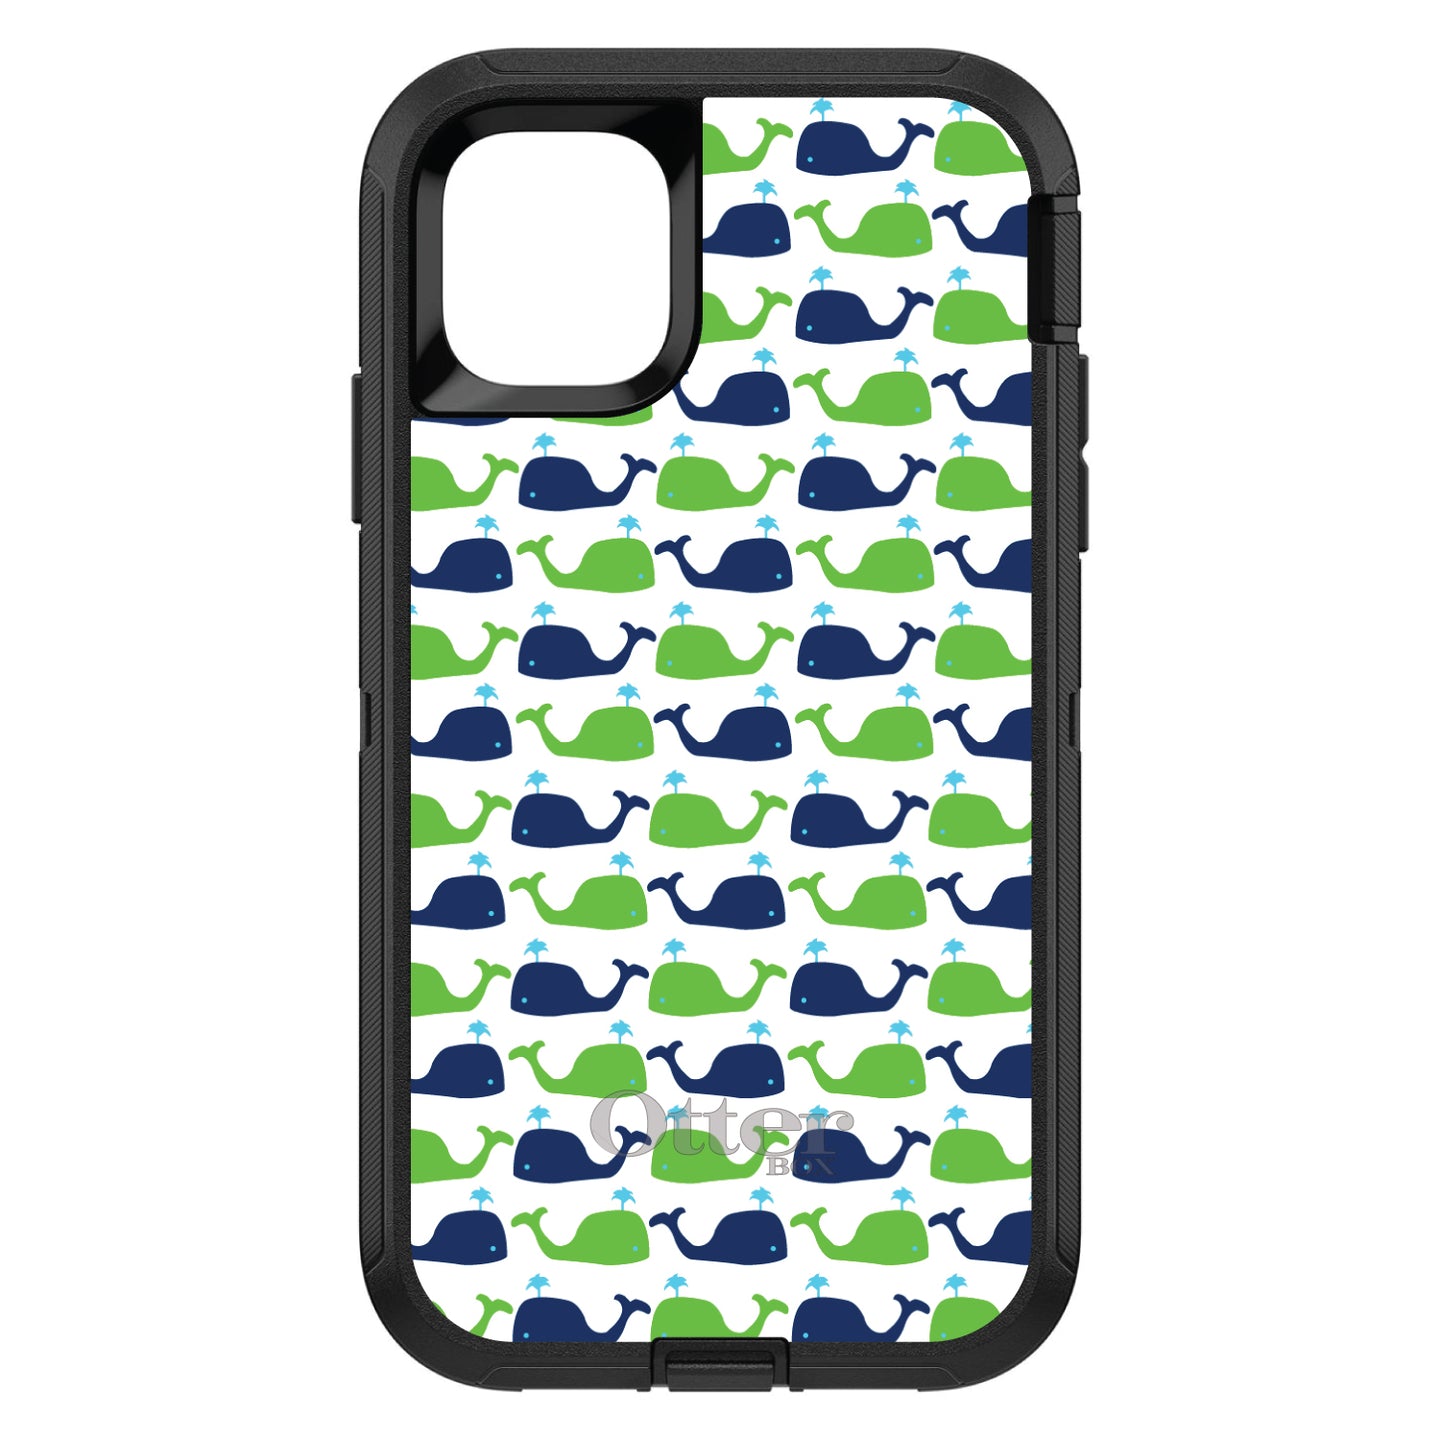 DistinctInk™ OtterBox Defender Series Case for Apple iPhone / Samsung Galaxy / Google Pixel - Green Navy Cartoon Whales